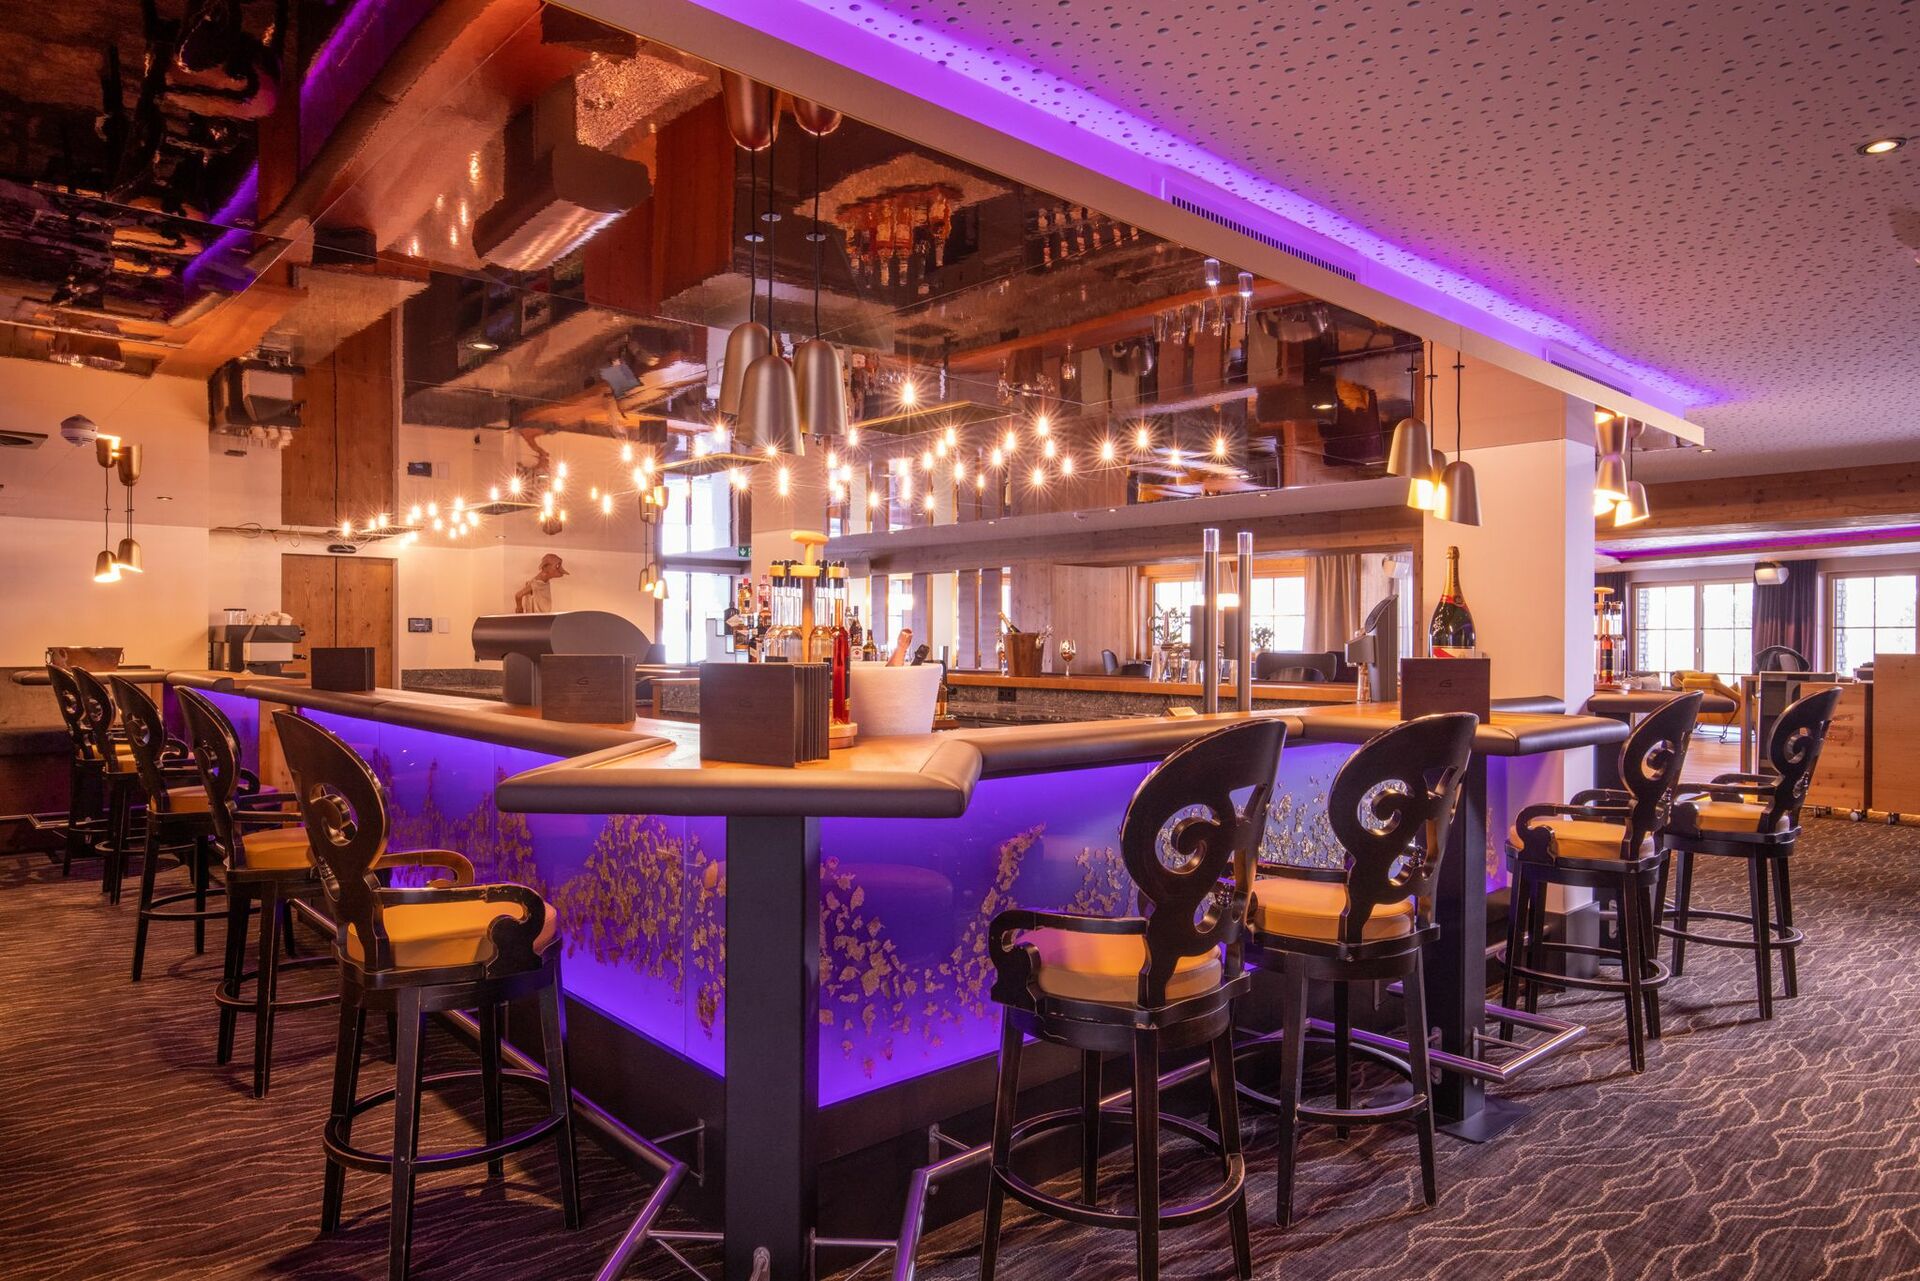 A bar with purple light.